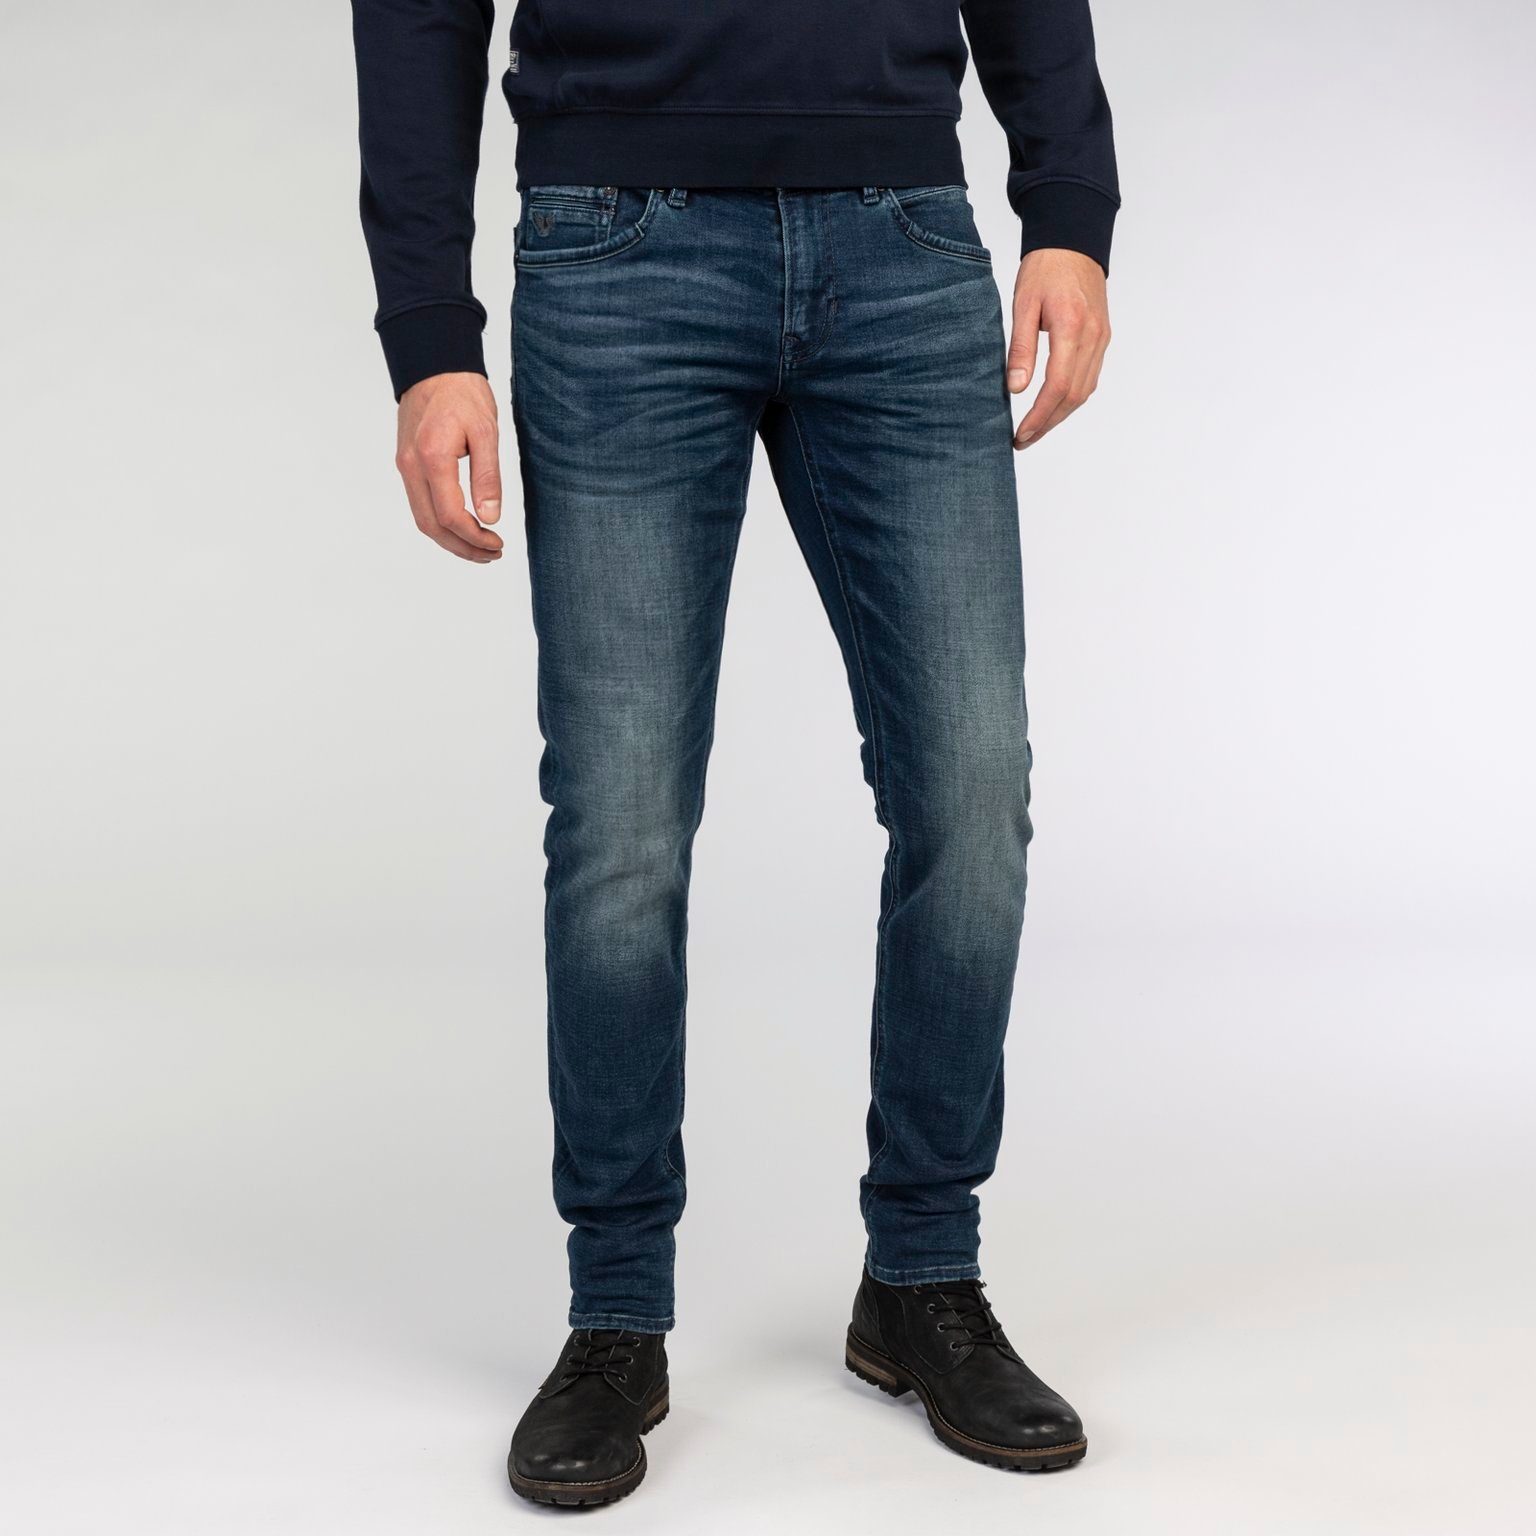 LEGEND PTR140-DBI PME blue 5-Pocket-Jeans dark PME LEGEND TAILWHEEL indigo